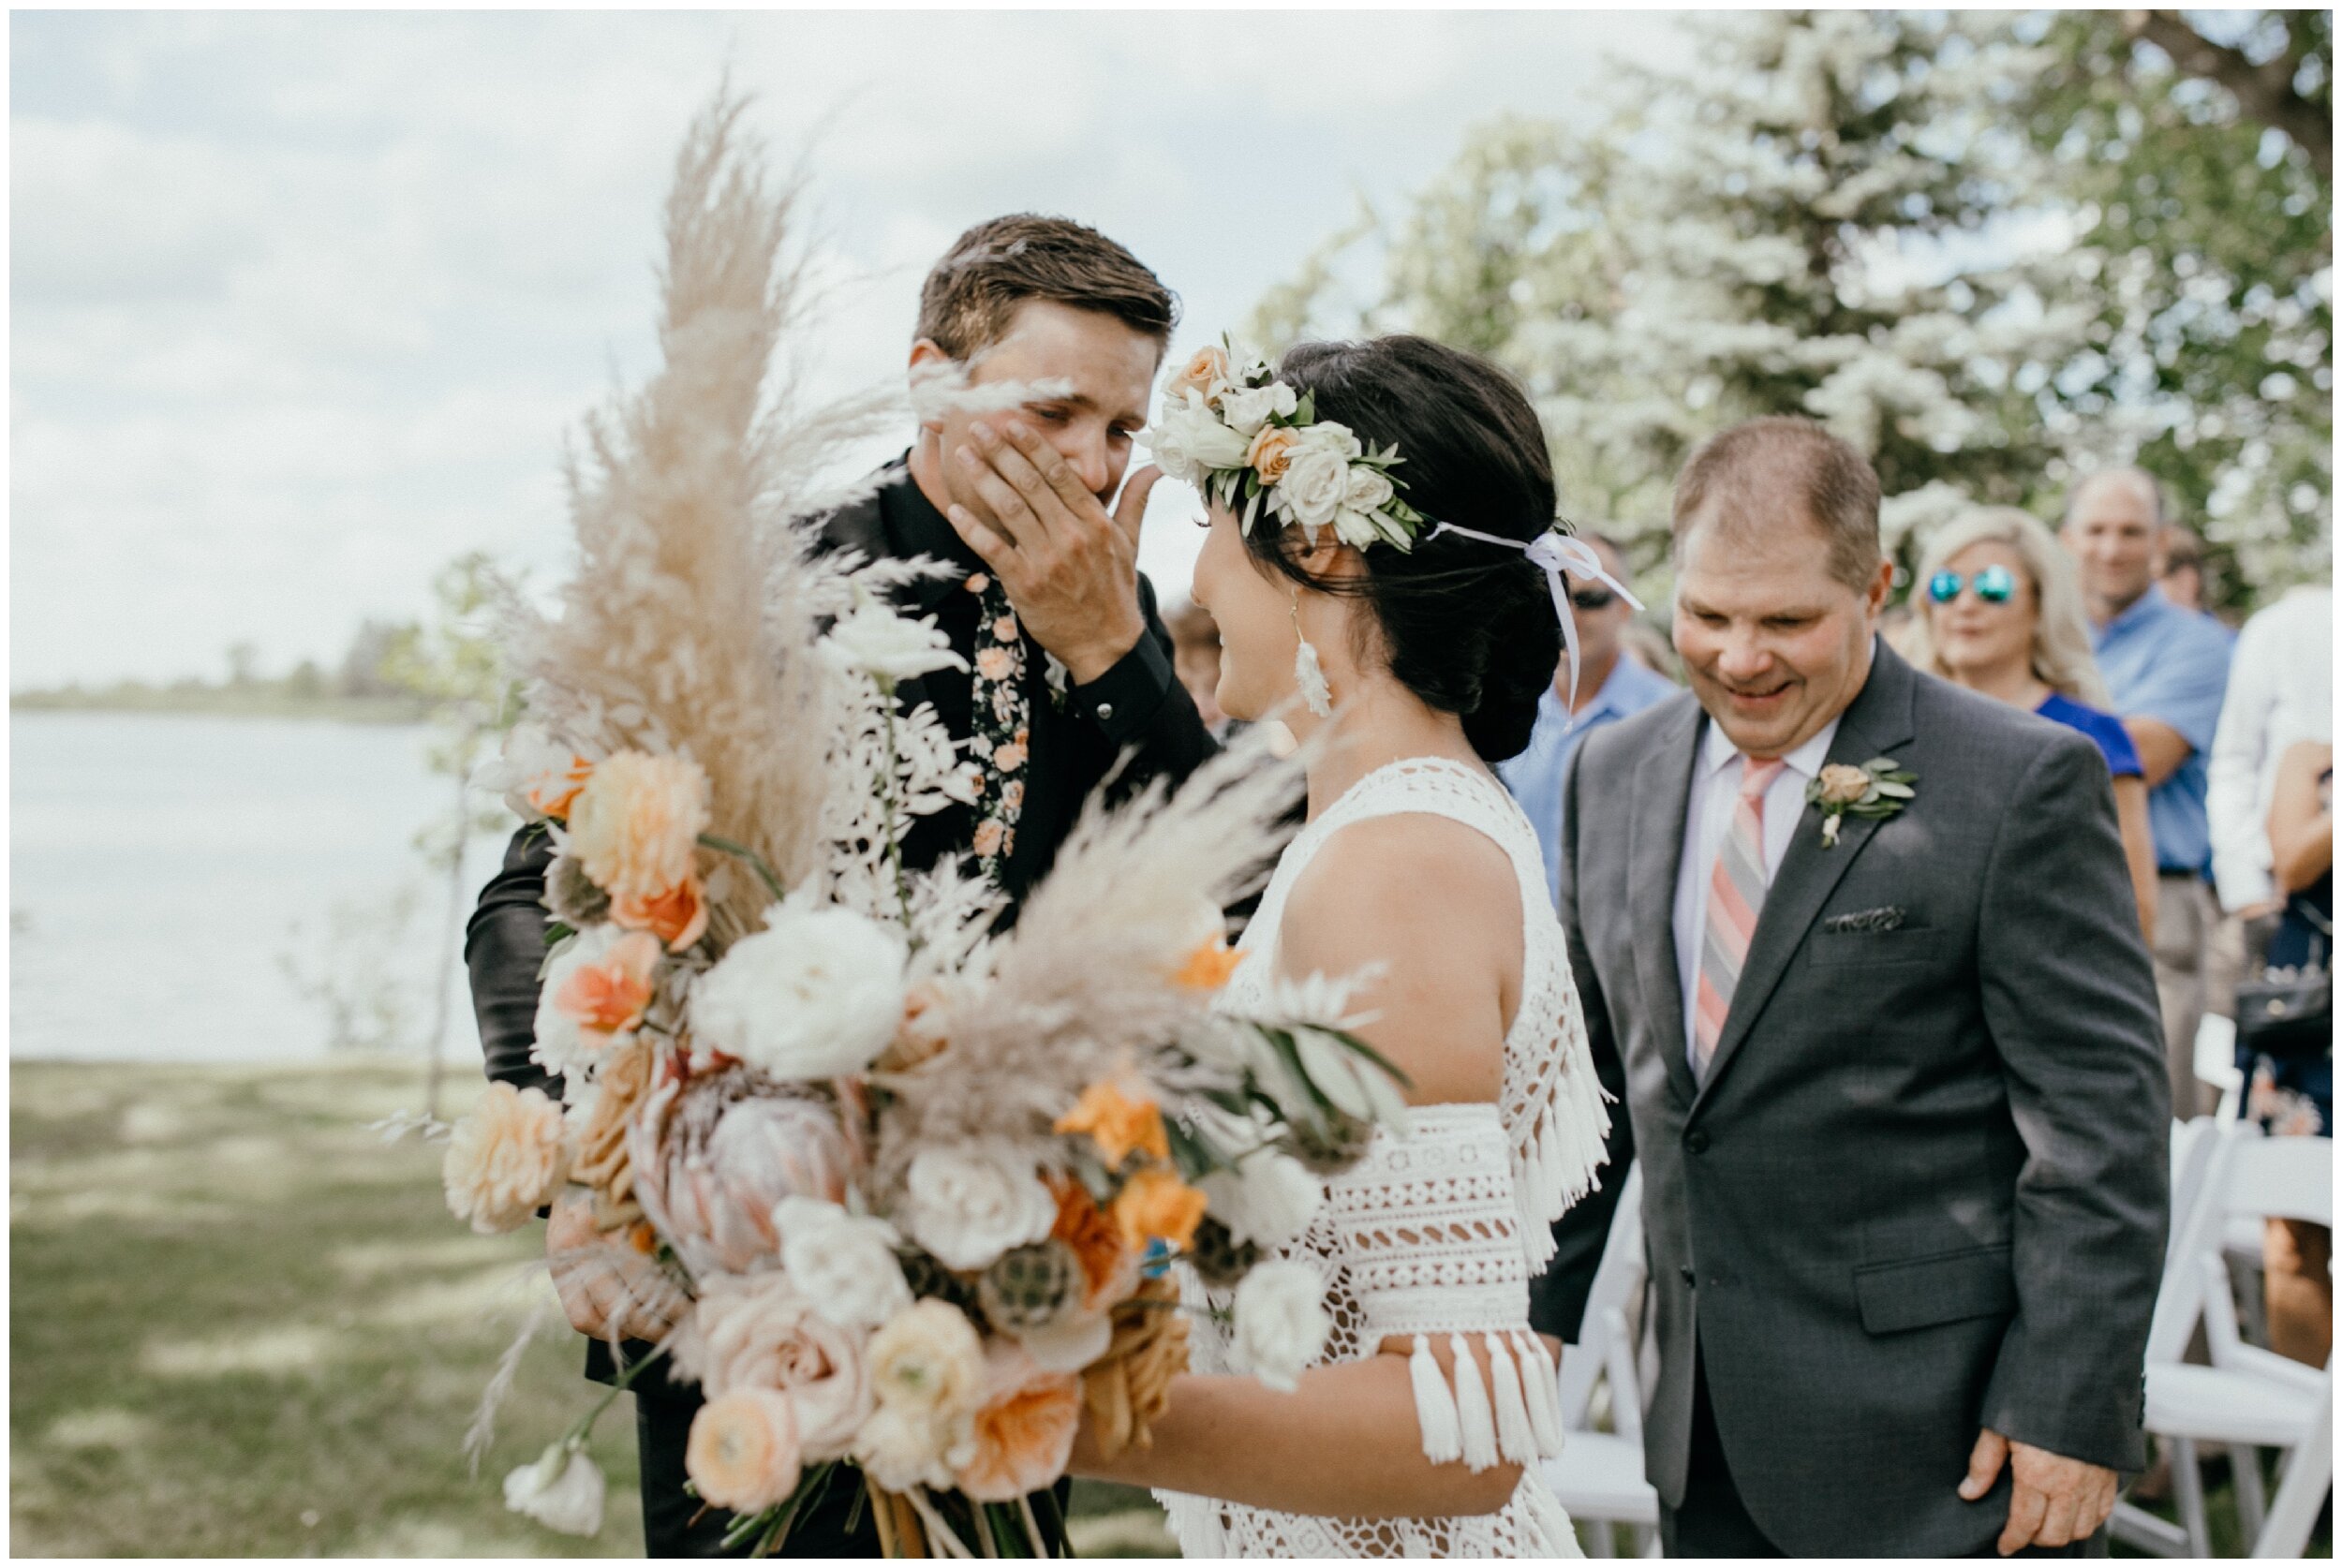 Emotional groom as bride walks down aisle at Minnesota backyard summer wedding